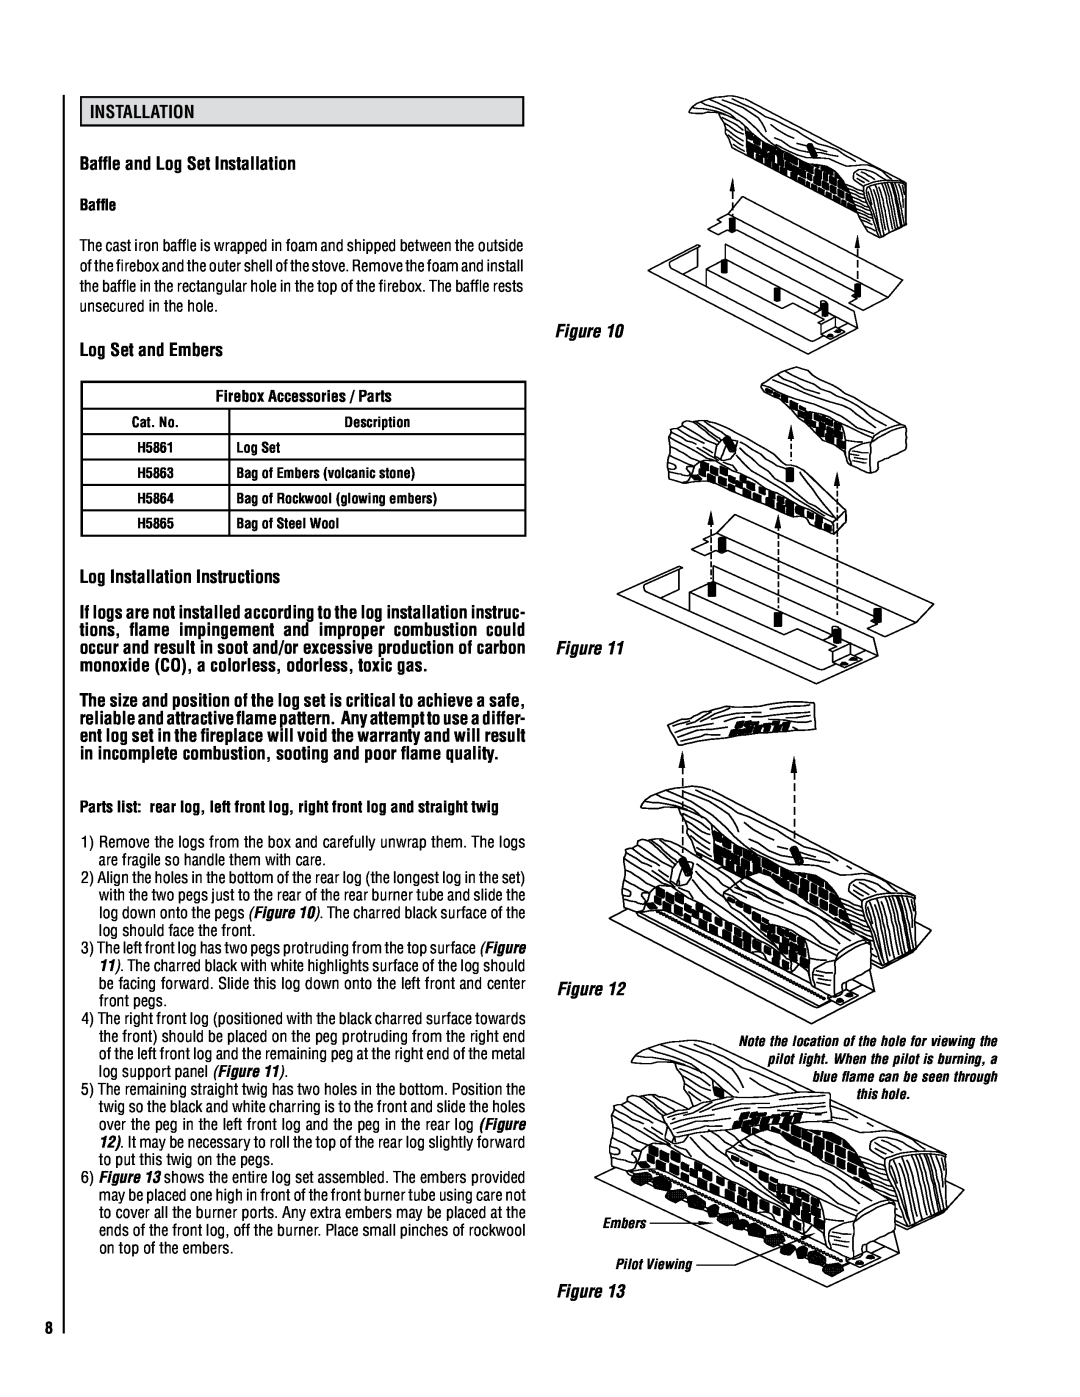 Lennox Hearth VIN INSTALLATION Baffle and Log Set Installation, Log Set and Embers, Log Installation Instructions 